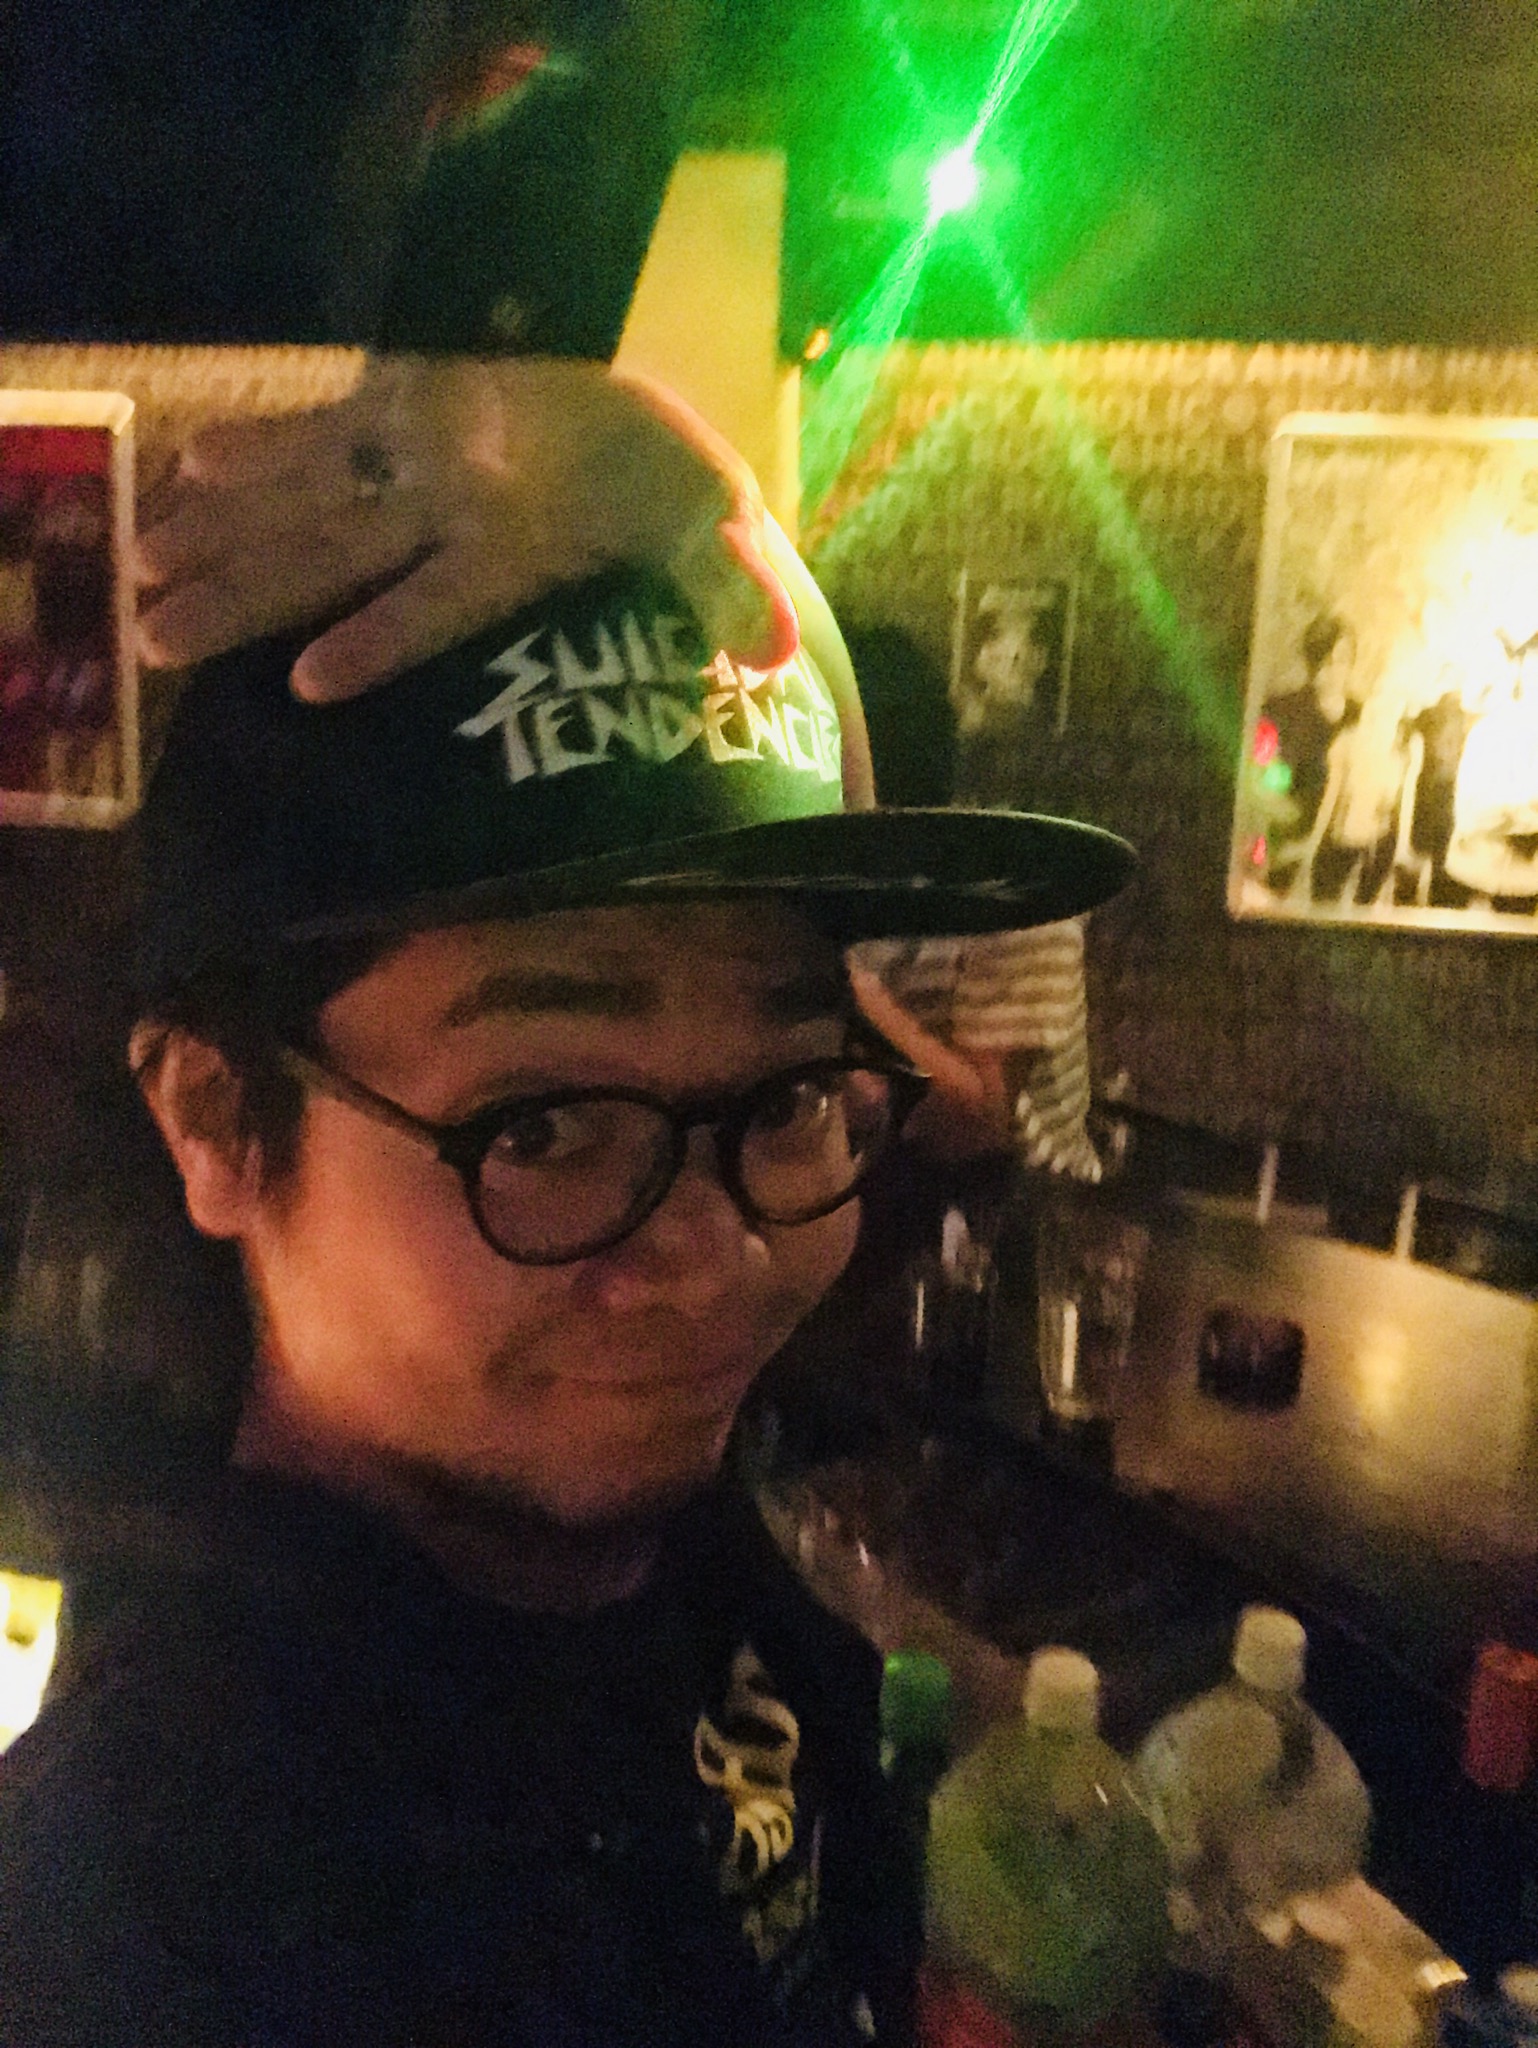 https://bar-rockaholic.jp/shibuya/blog/94519E5A-BAE1-4A49-88FD-99AEE38D8F52.jpeg